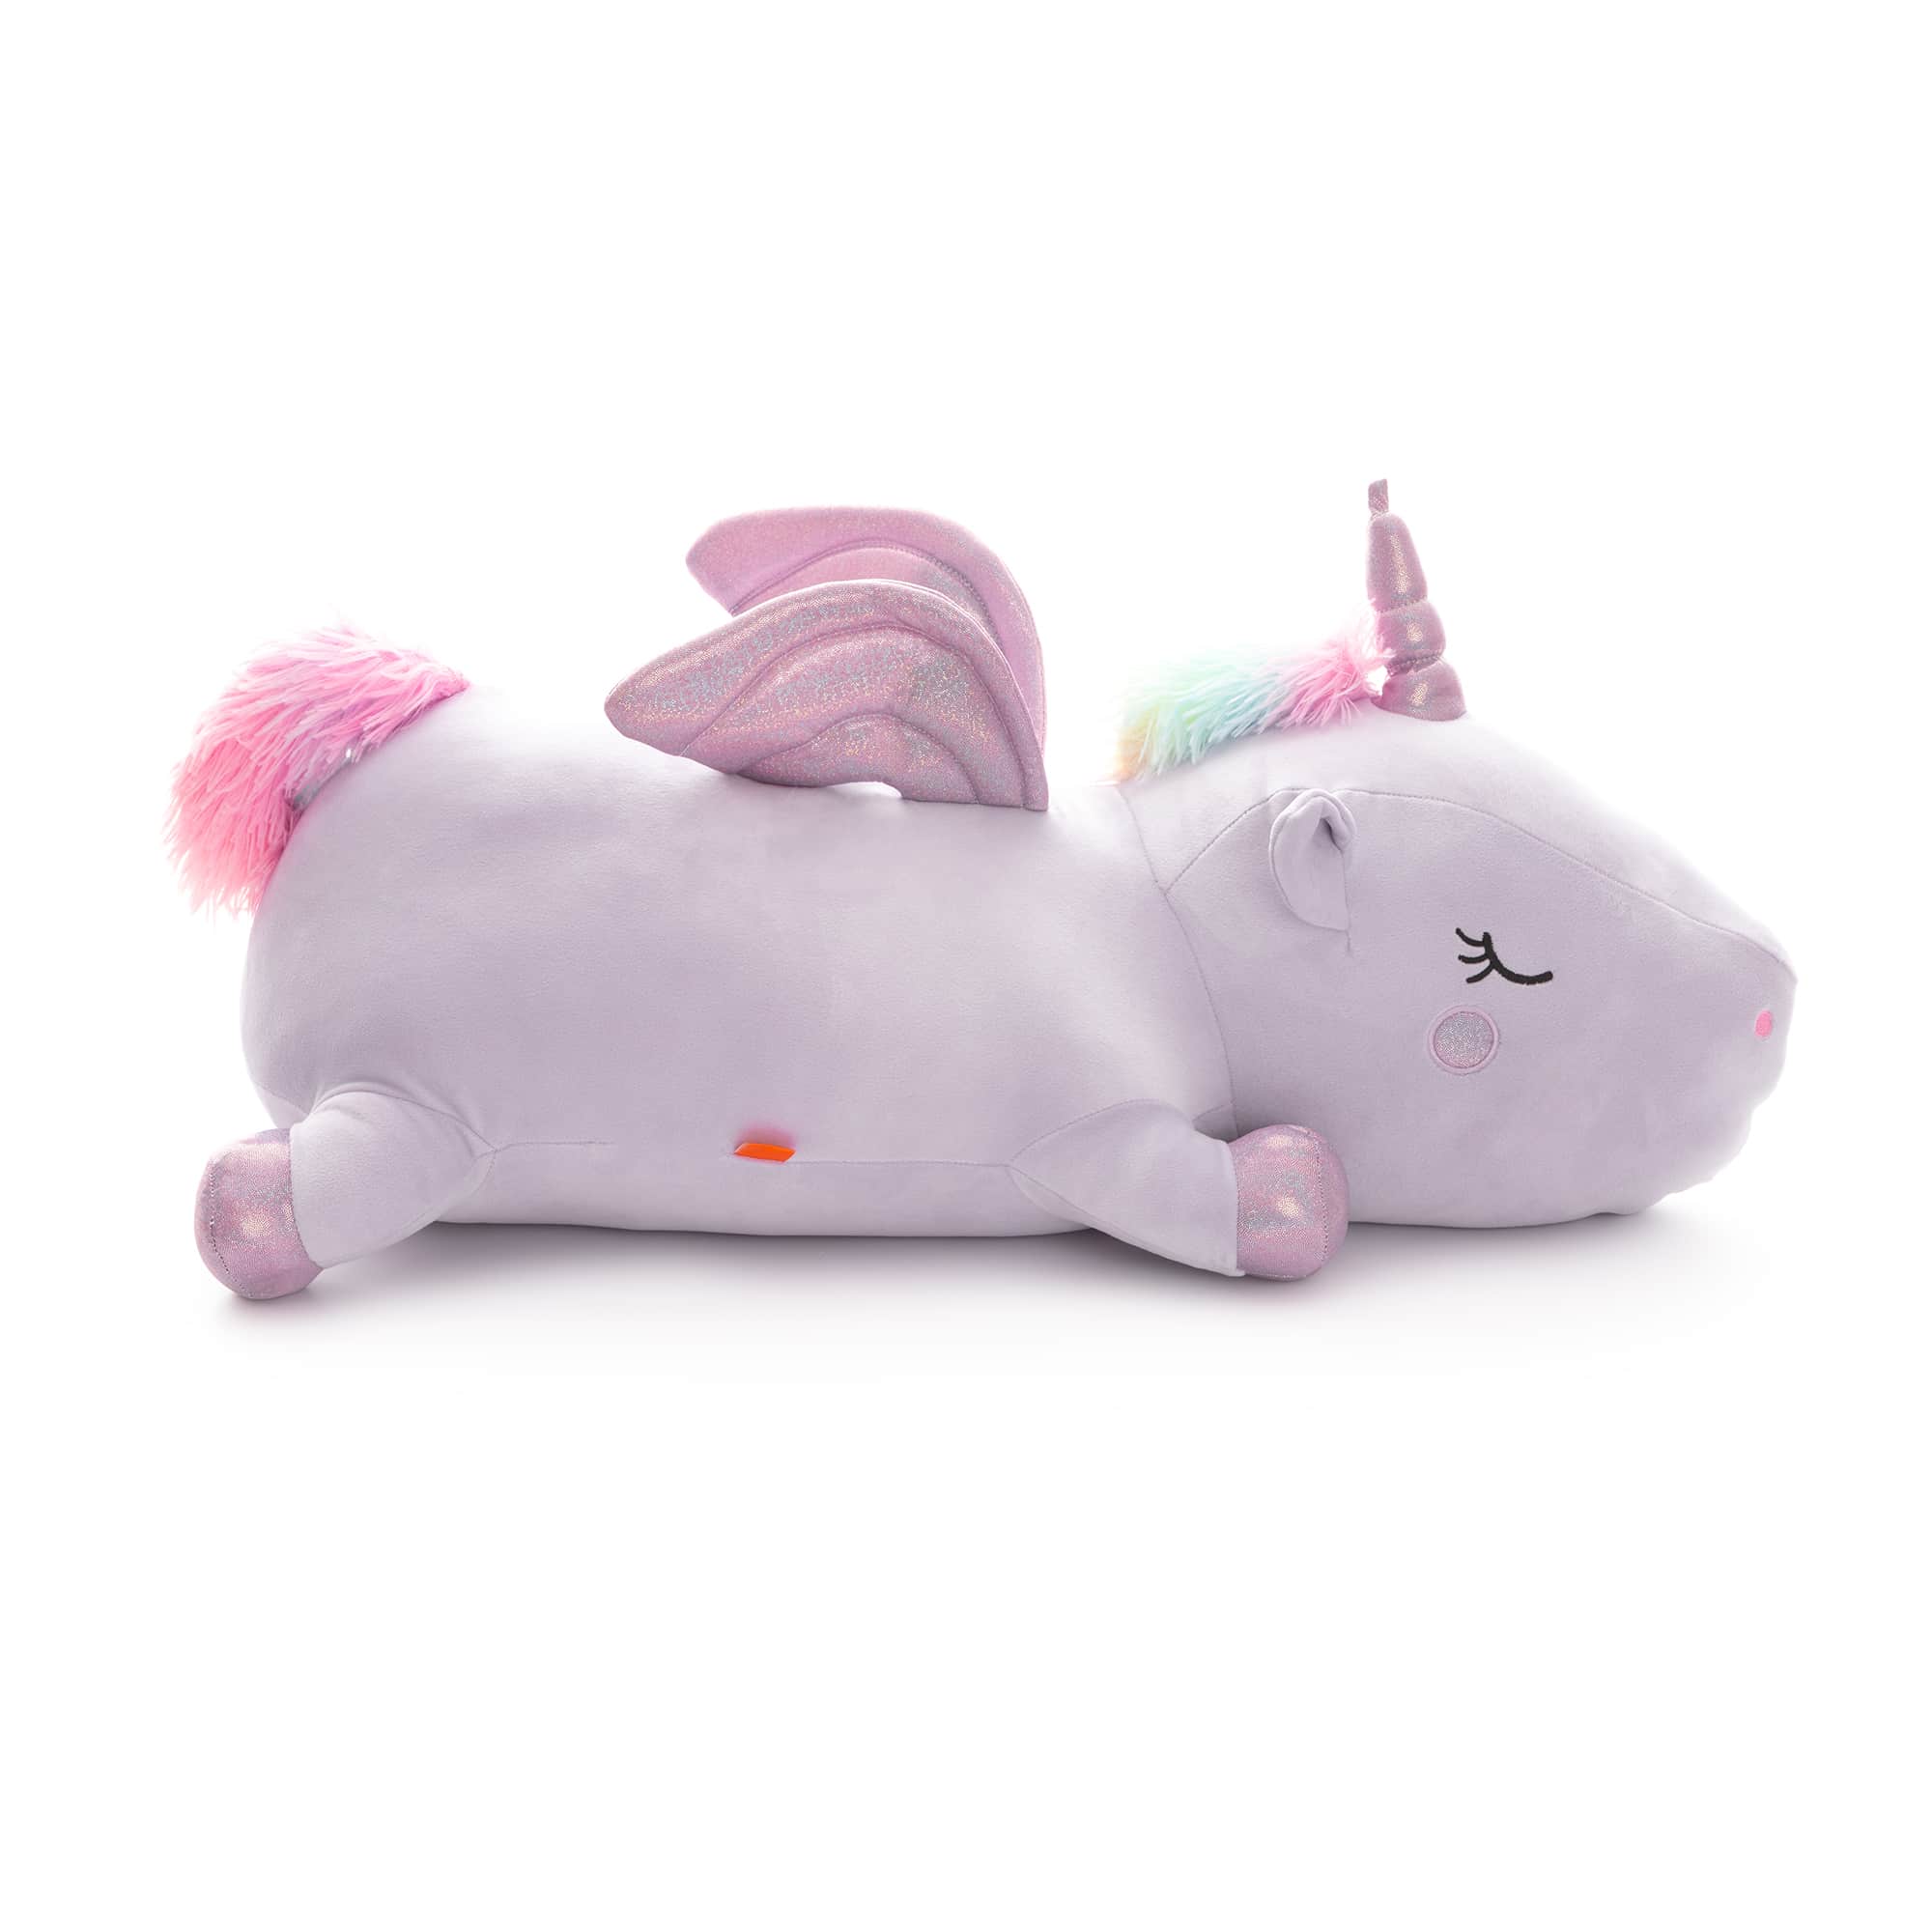 Squishie Plush - unicorn